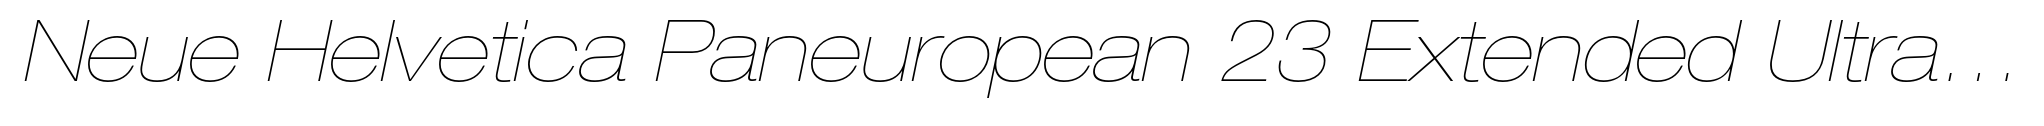 Neue Helvetica Paneuropean 23 Extended Ultra Light Oblique image